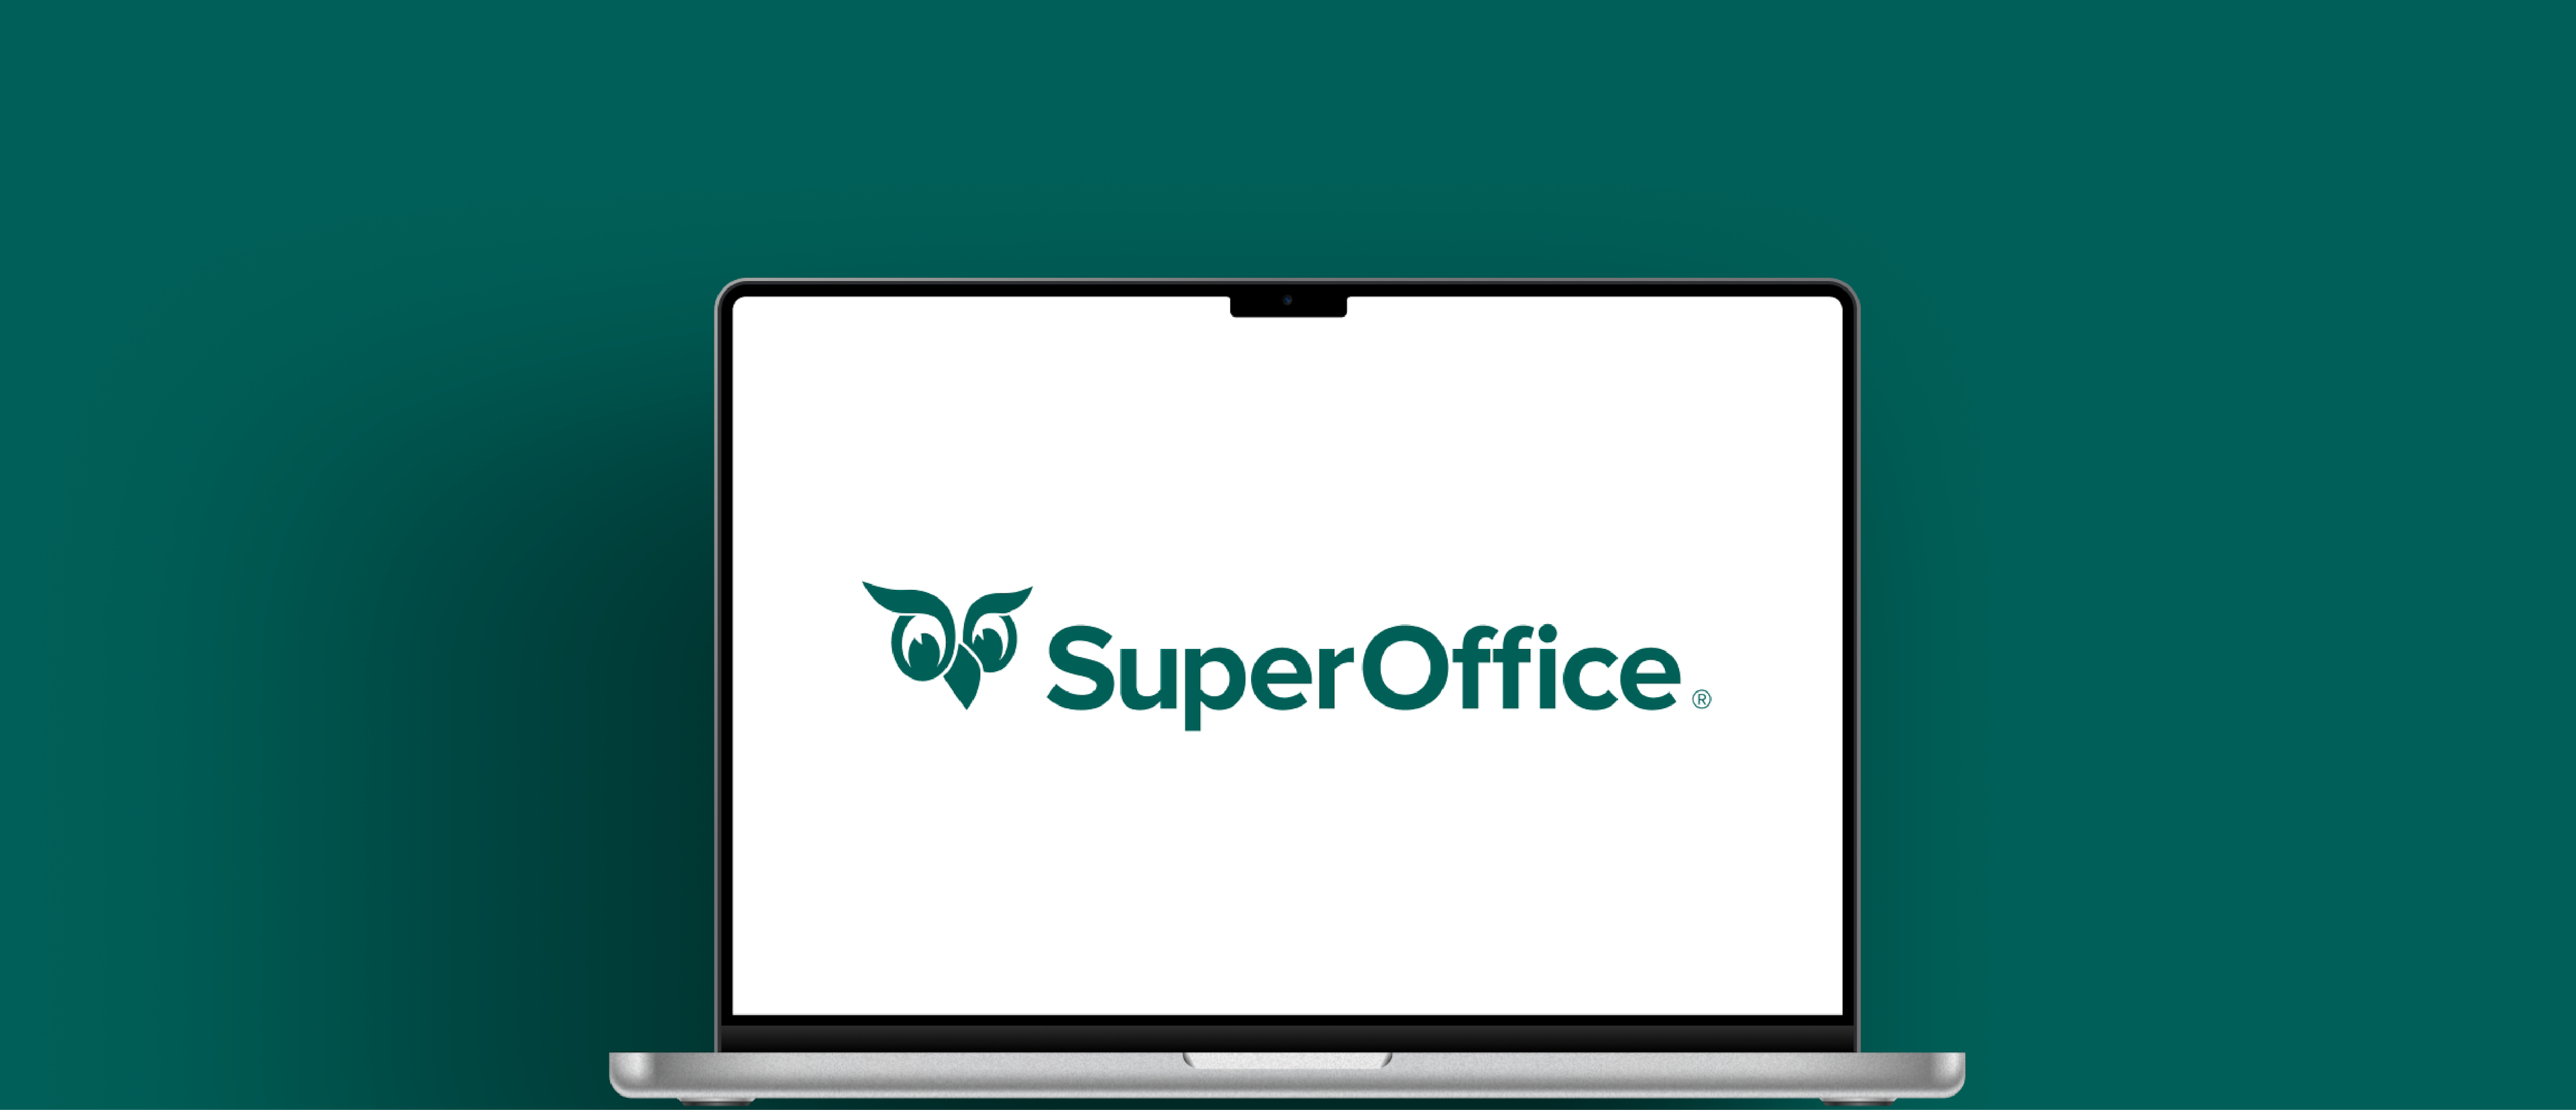 SuperOffice suksesshistorie